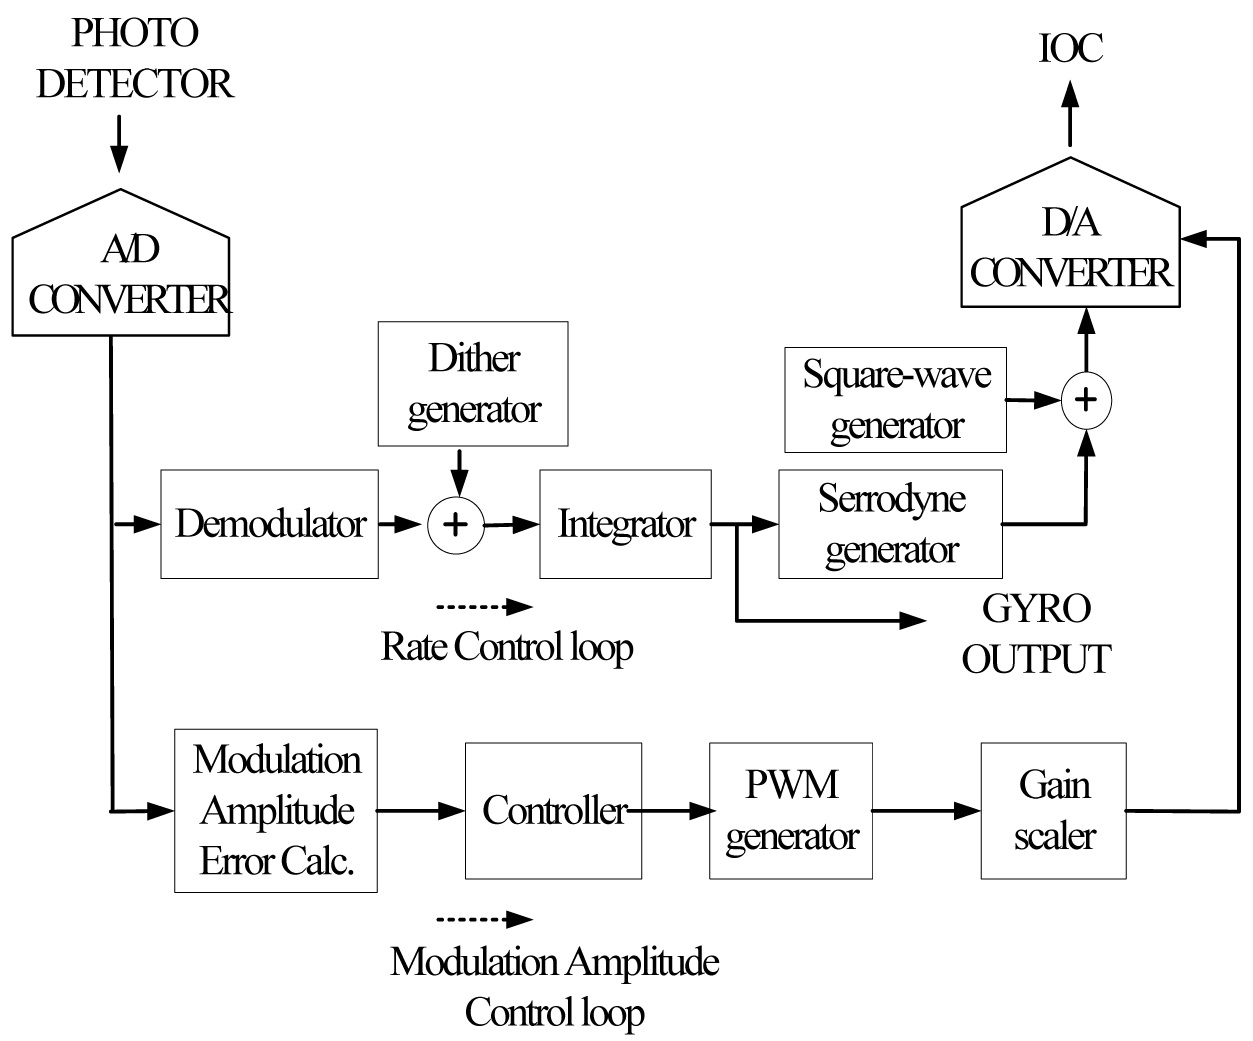 Signal processing block diagram for phase modulation amplitude control.